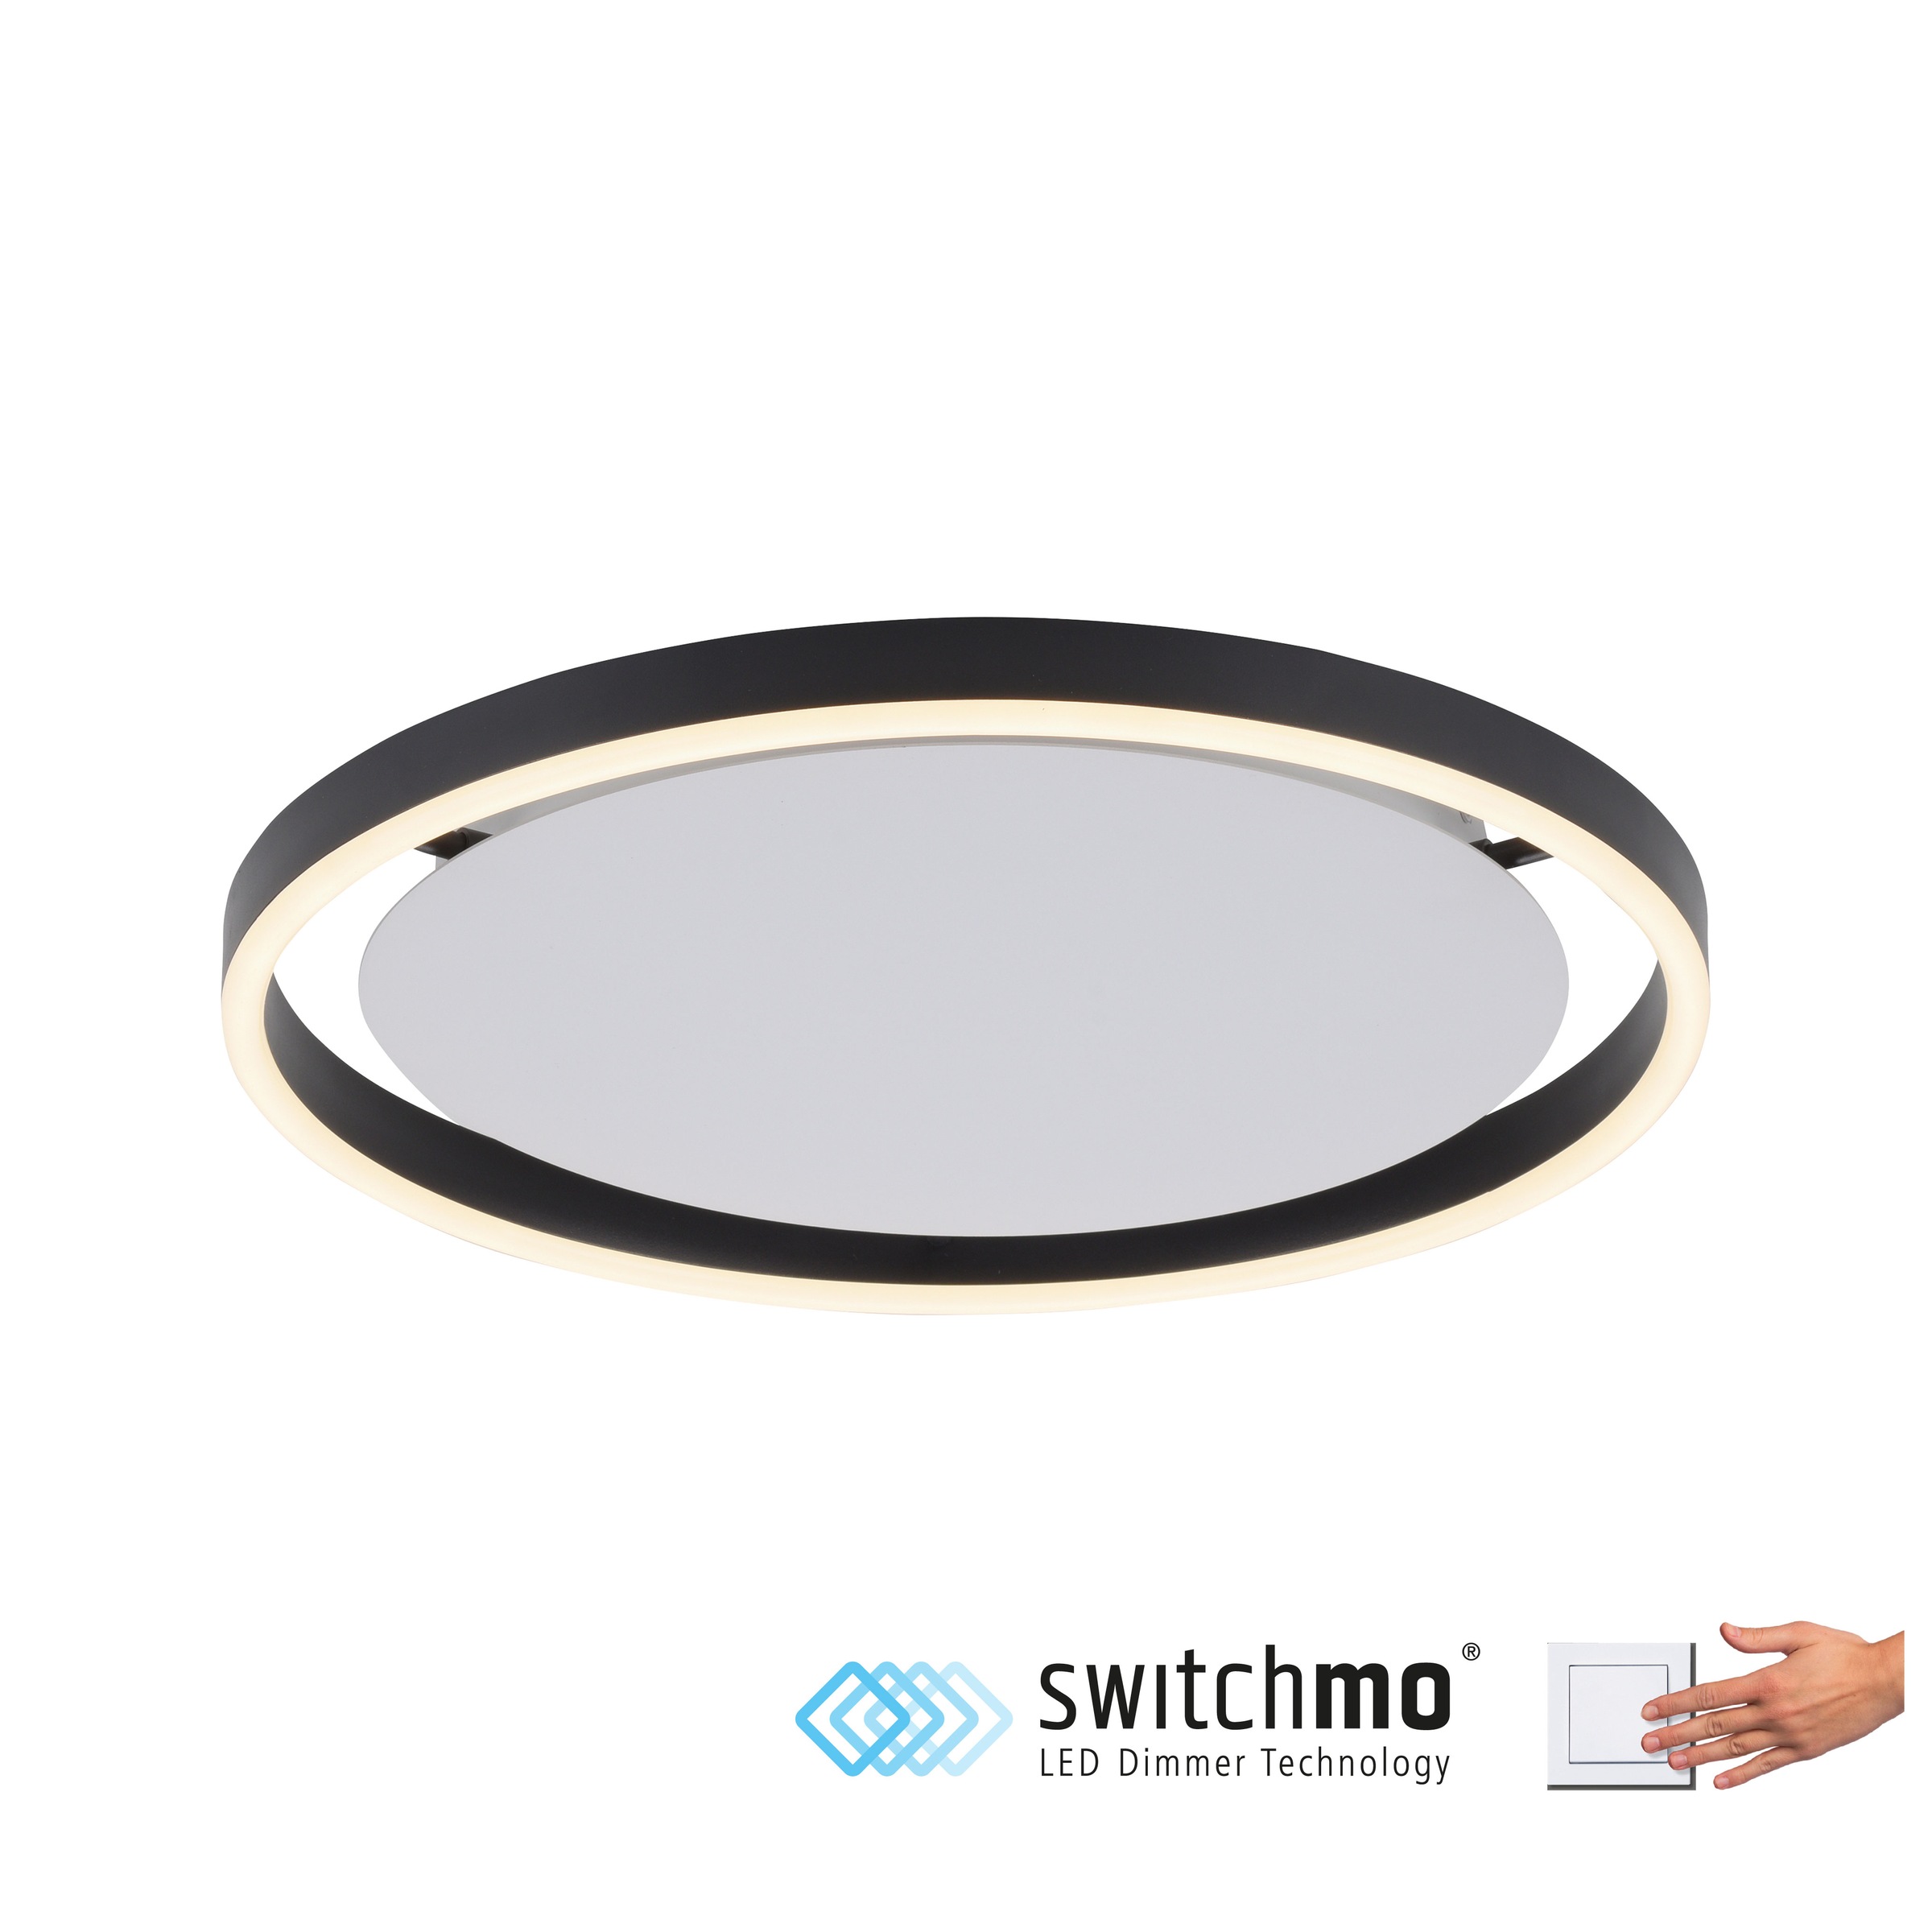 kaufen »RITUS«, Direkt Switchmo LED, dimmbar, 1 flammig-flammig, Leuchten online Switchmo, dimmbar, Deckenleuchte